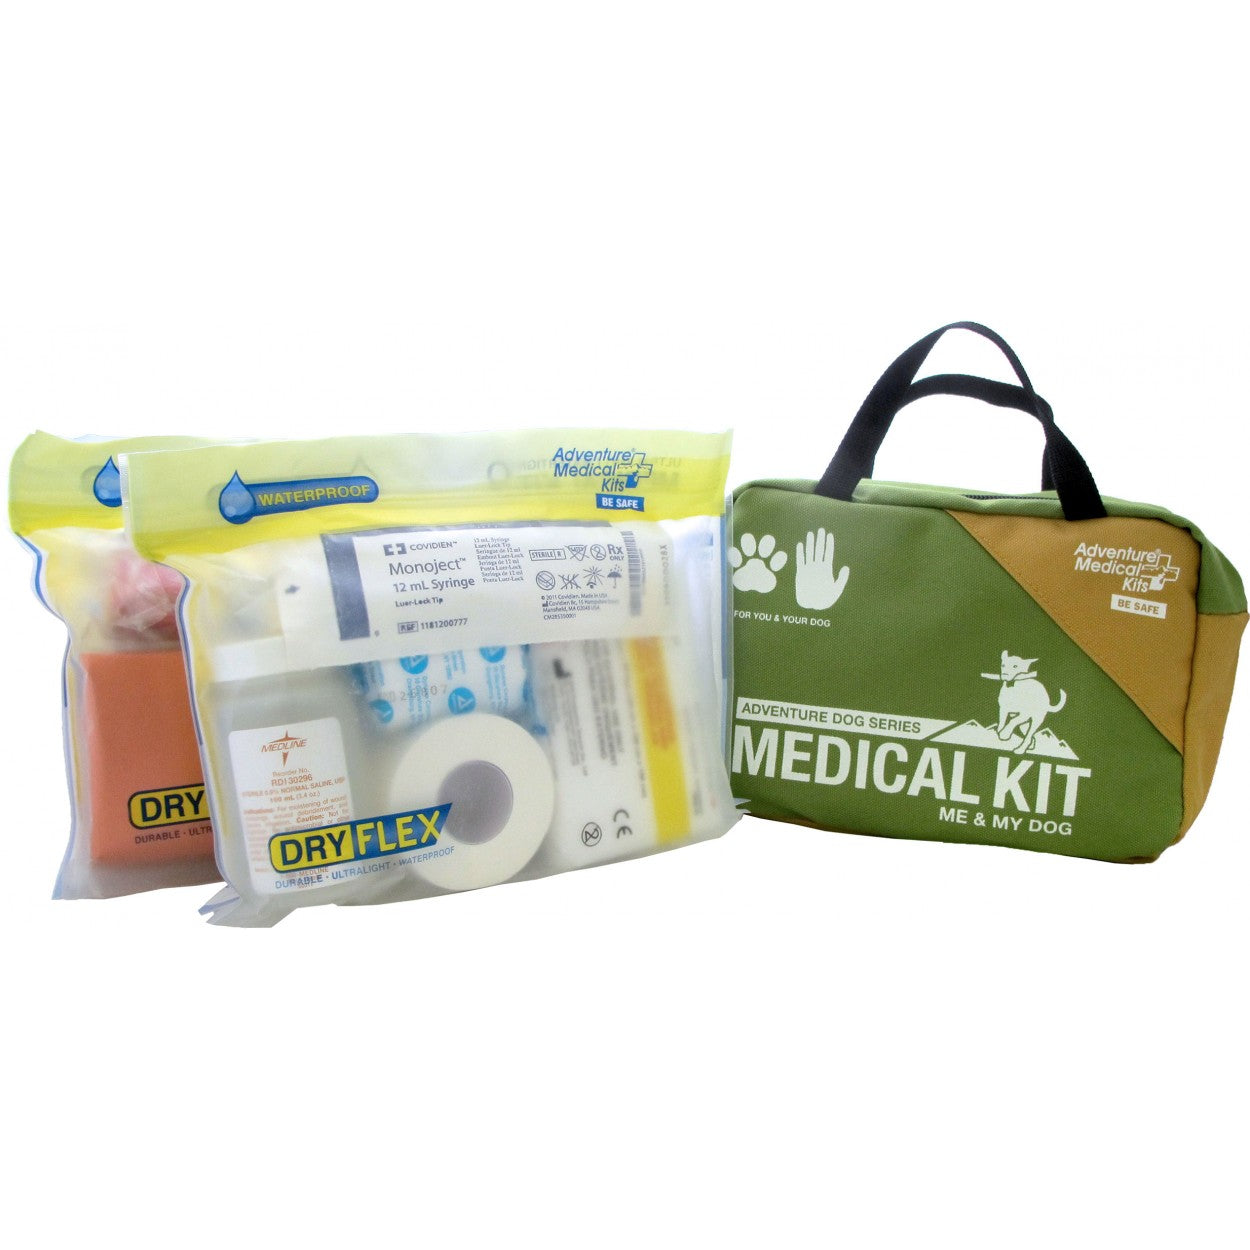 Adventure Dog Series - Me & My Dog First Aid Kit